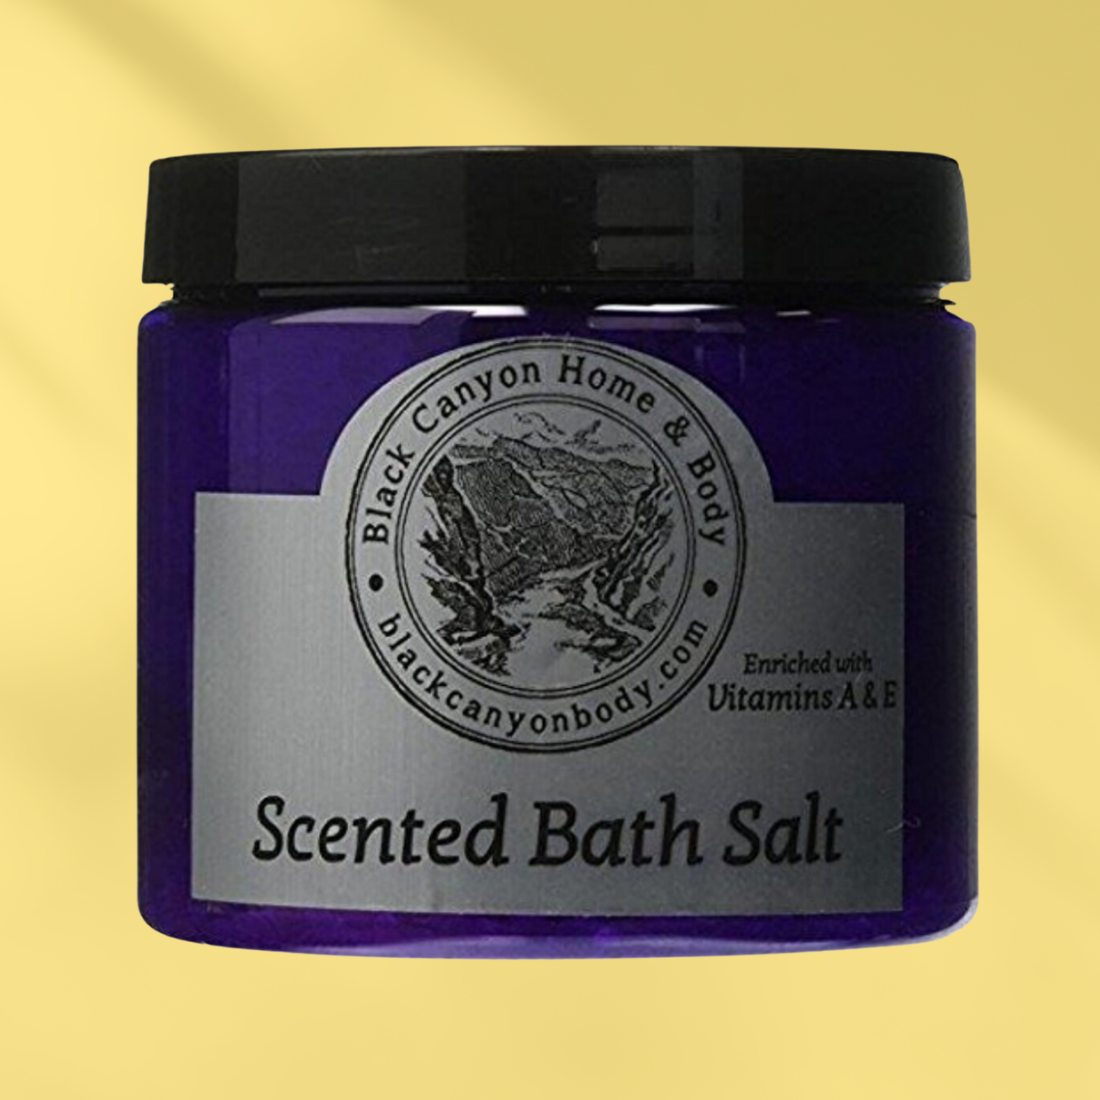 Black Canyon Cranberry Spice Scented Epsom Salt Bath Soak